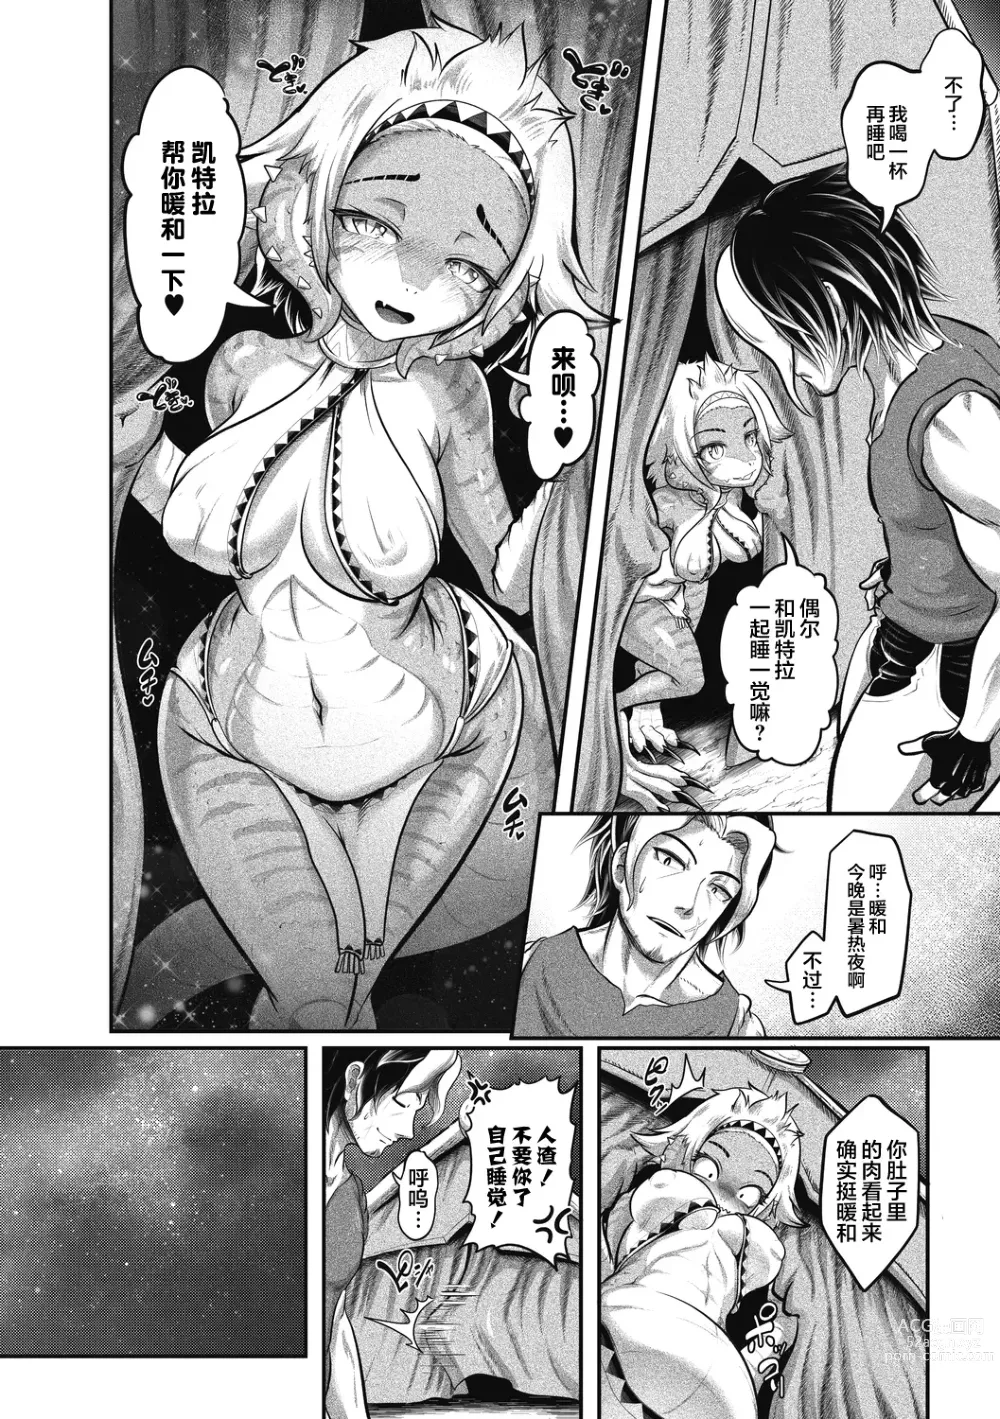 Page 7 of manga Dinosaur Journey